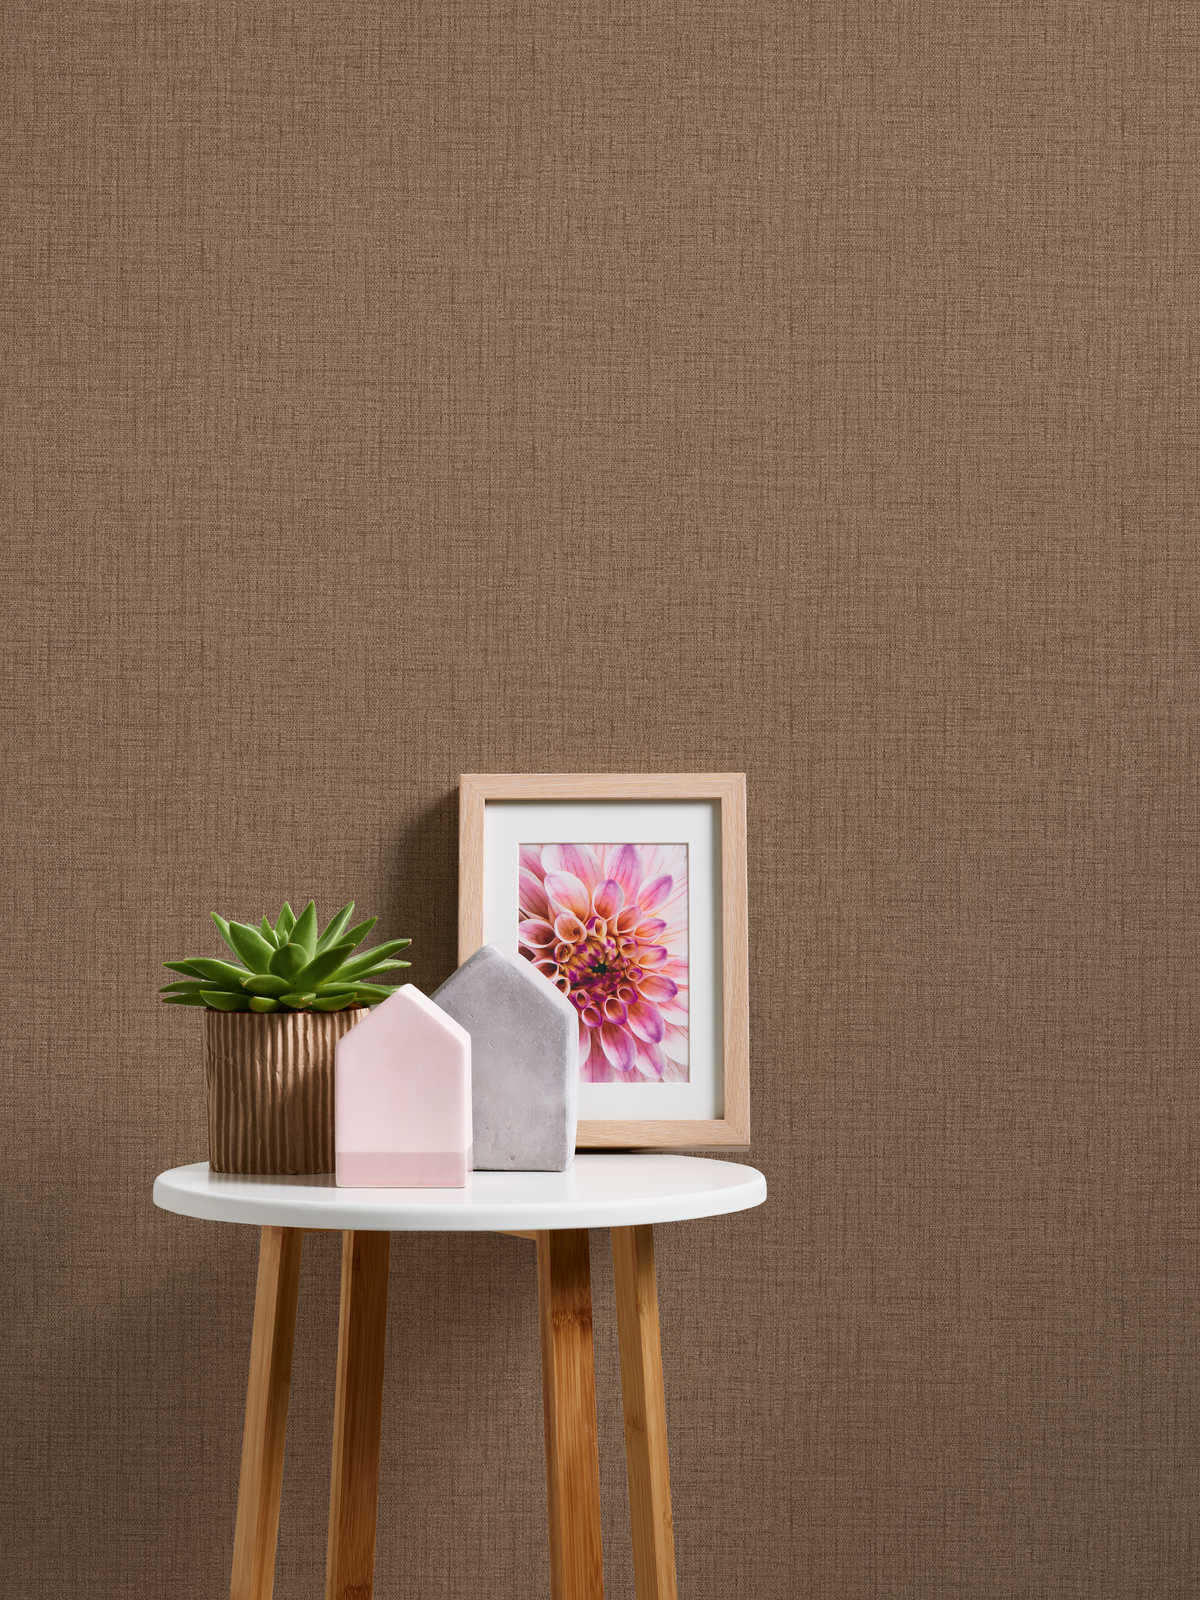             Non-woven wallpaper brown with textile optics & structure design
        